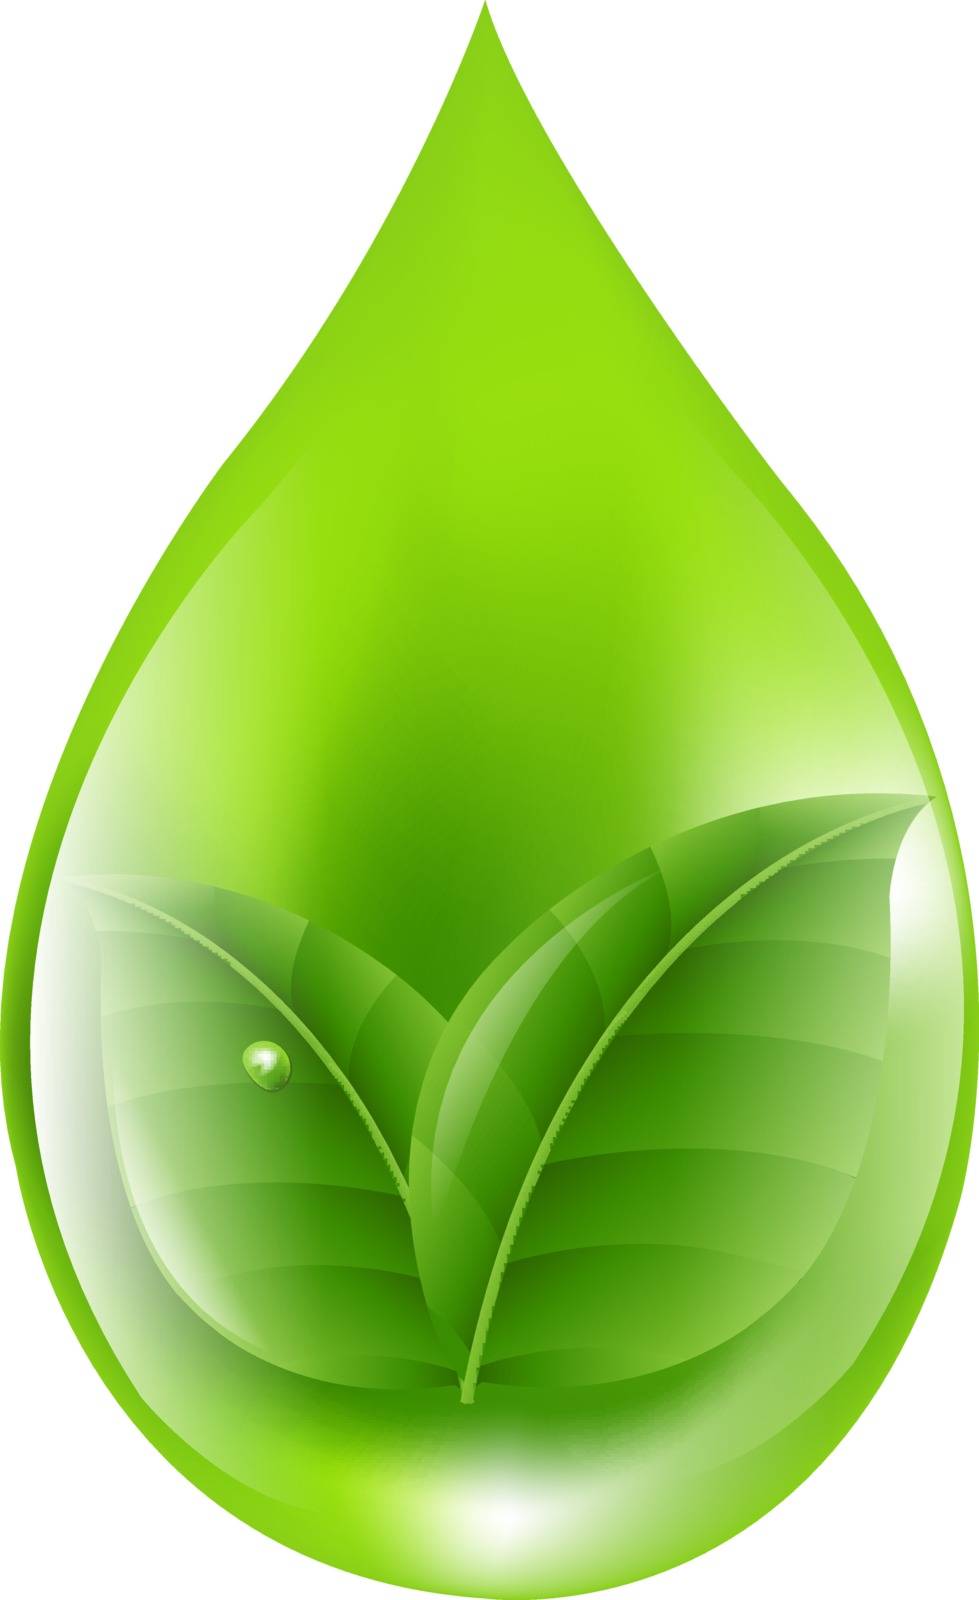 Green Drop With Gradient Mesh, Vector Illustration